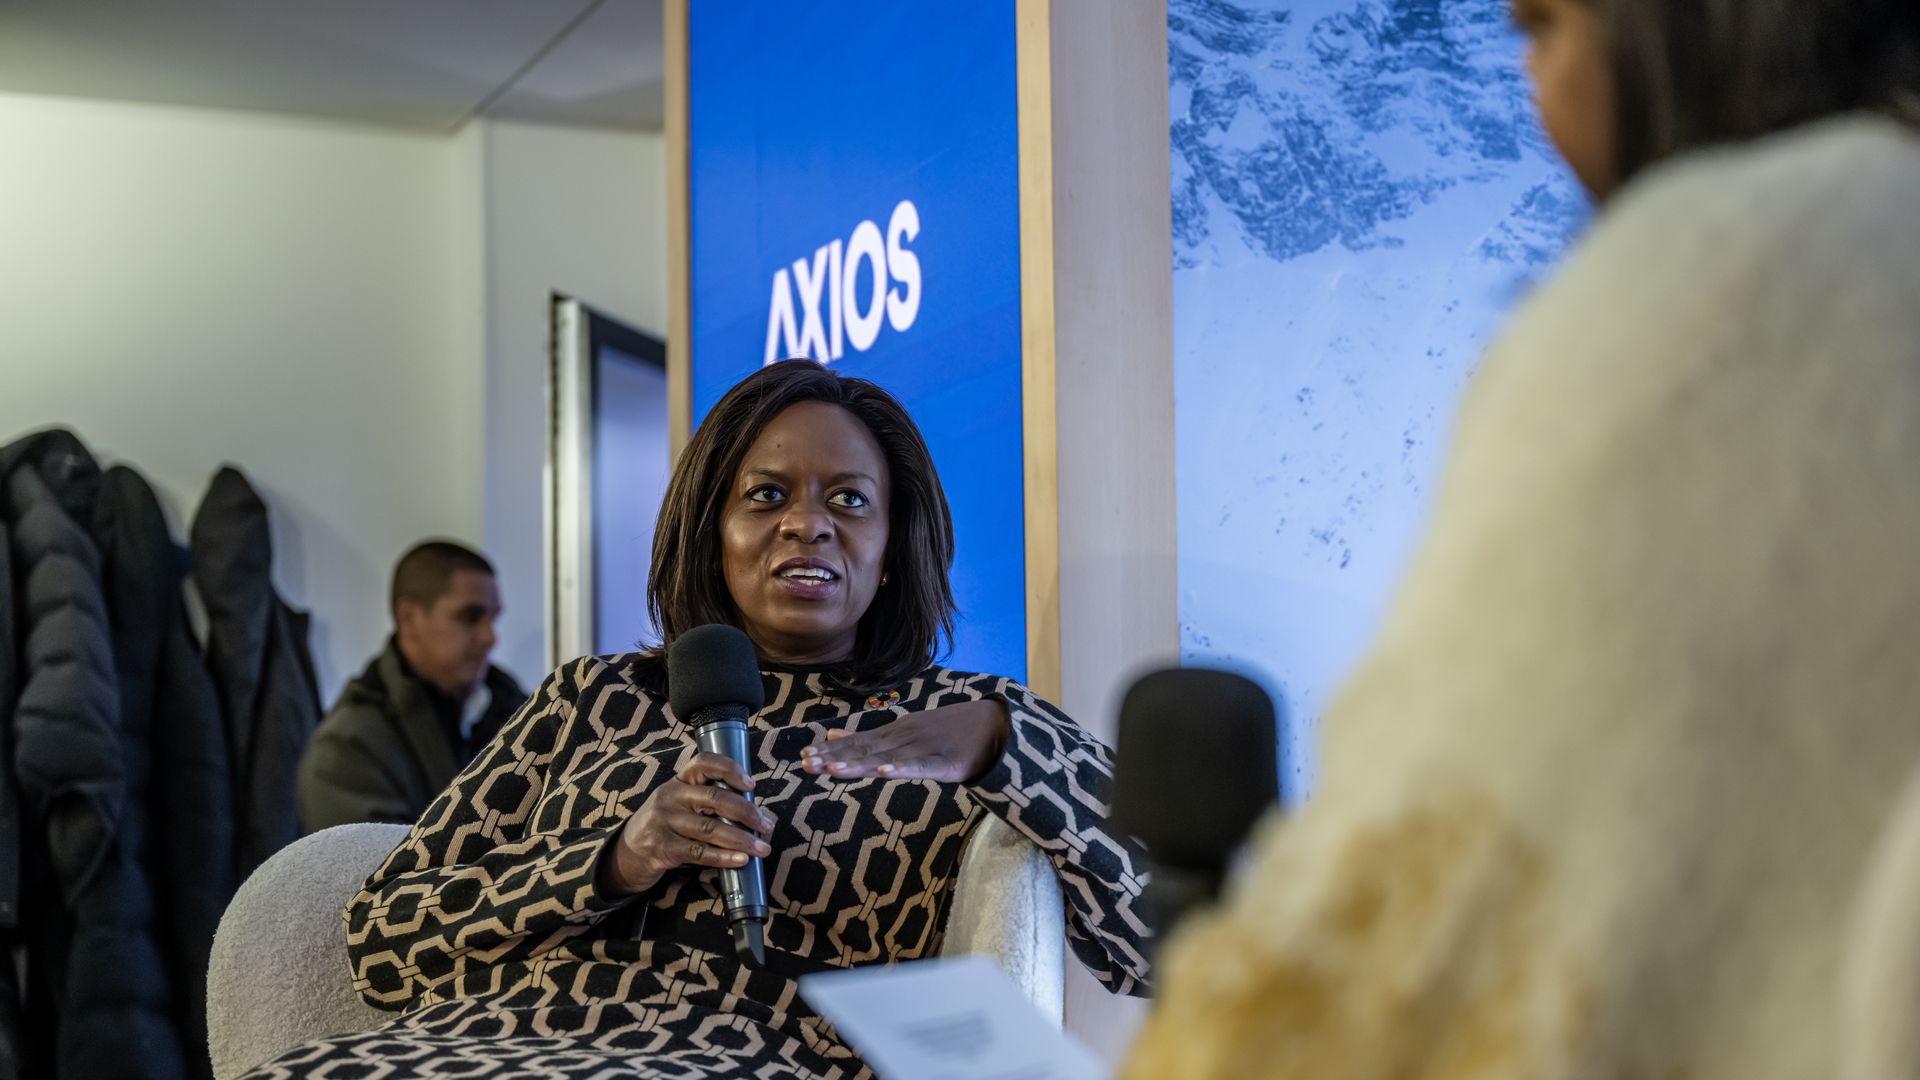 UN Global Compact CEO & executive director, Sanda Ojiambo speaking at Axios House Davos.